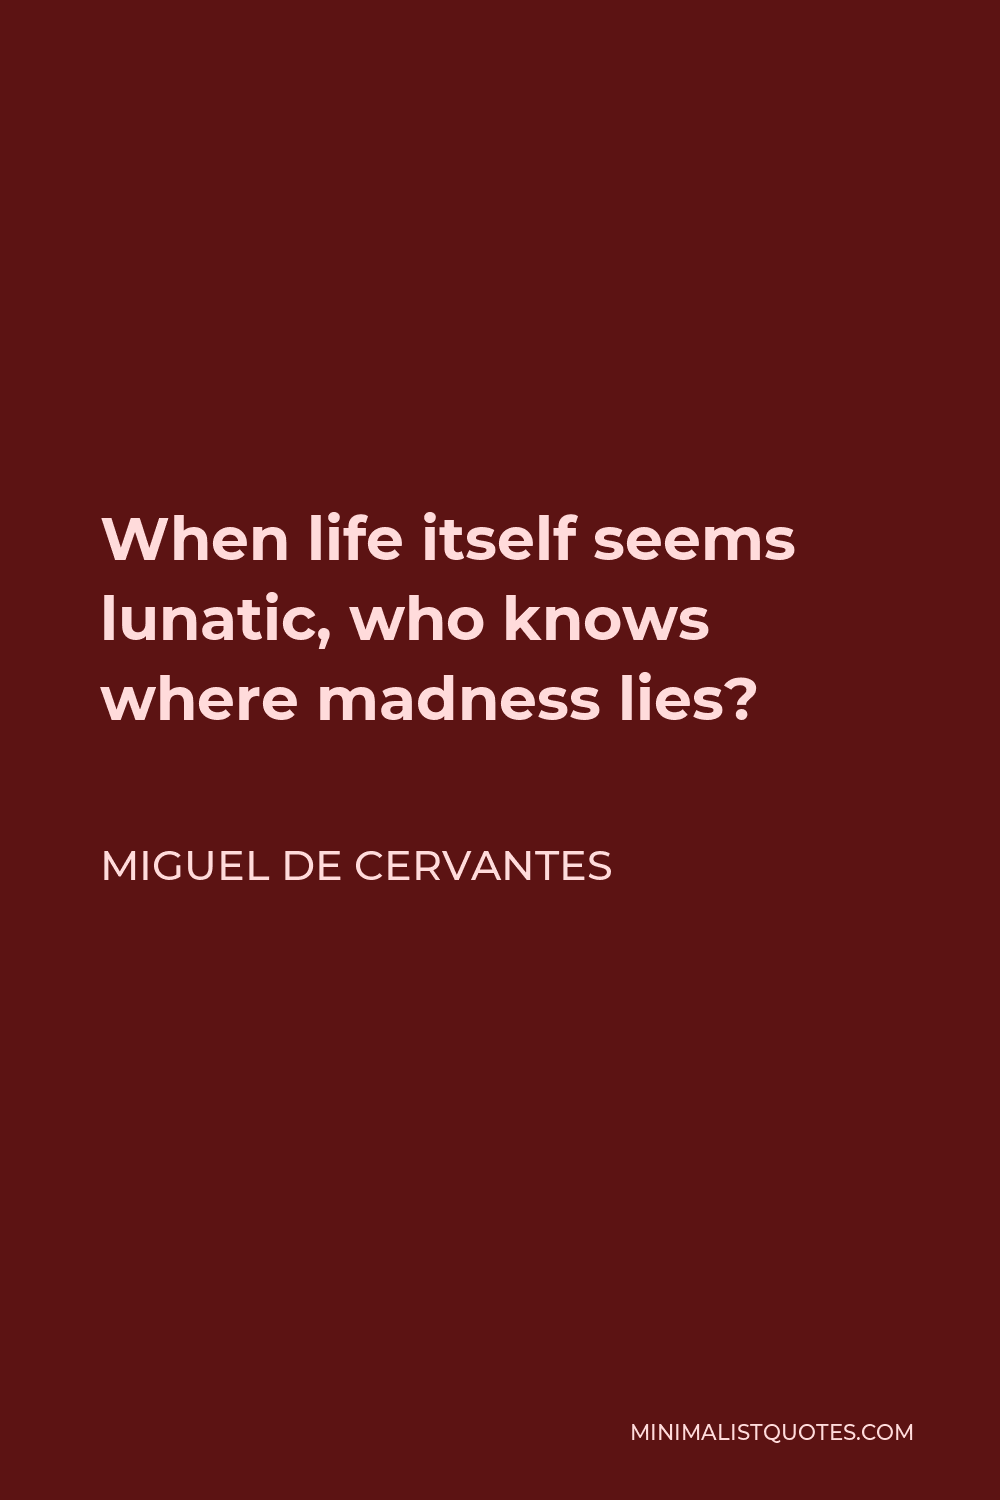 Miguel de Cervantes Quote - When life itself seems lunatic, who knows where madness lies?